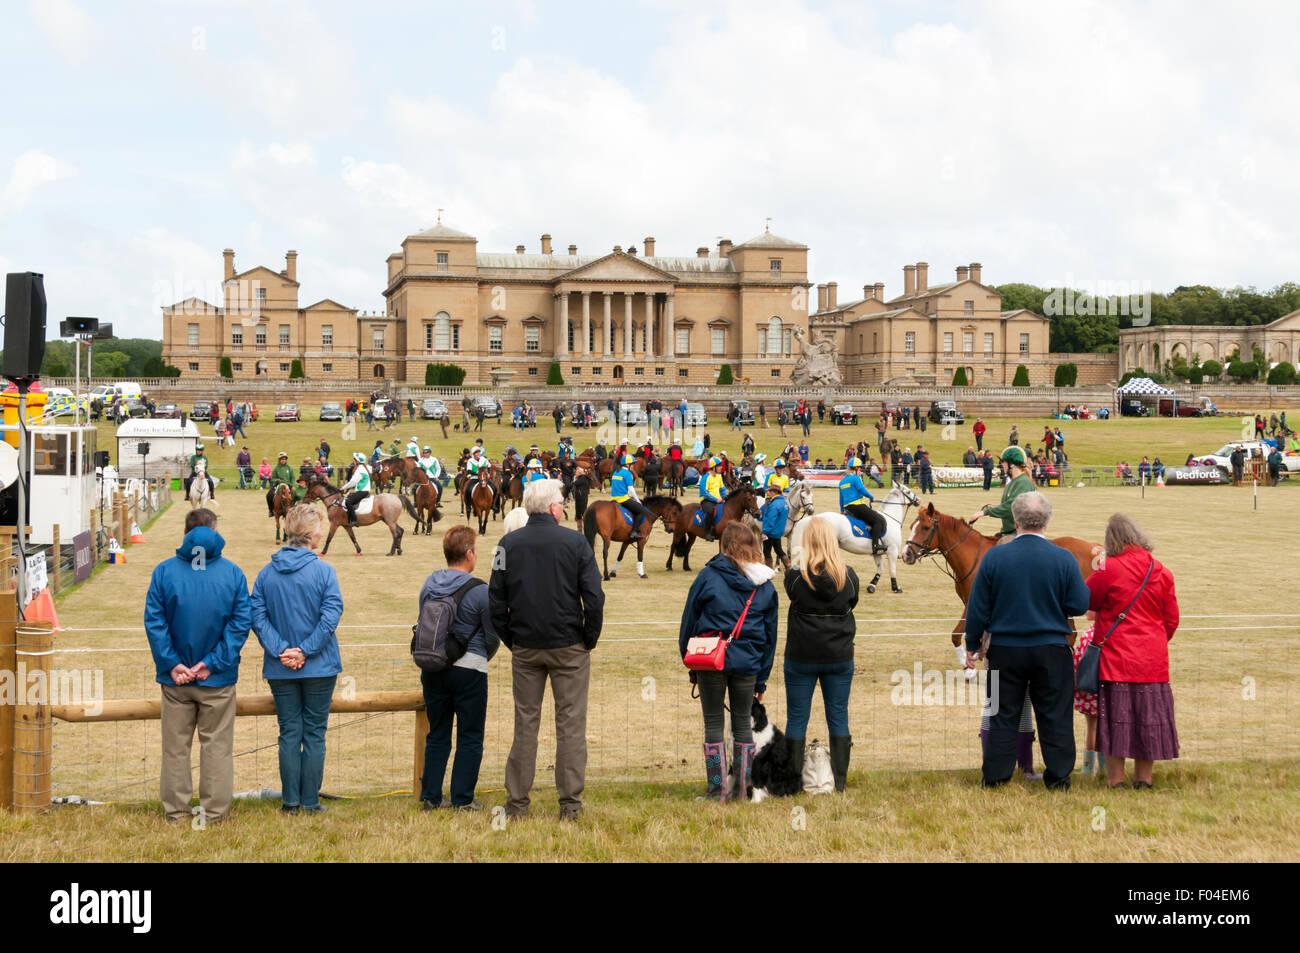 Leute beobachten die Mounted Games in den großen Ring vor Holkham Hall am Holkham Country Fair. Stockfoto